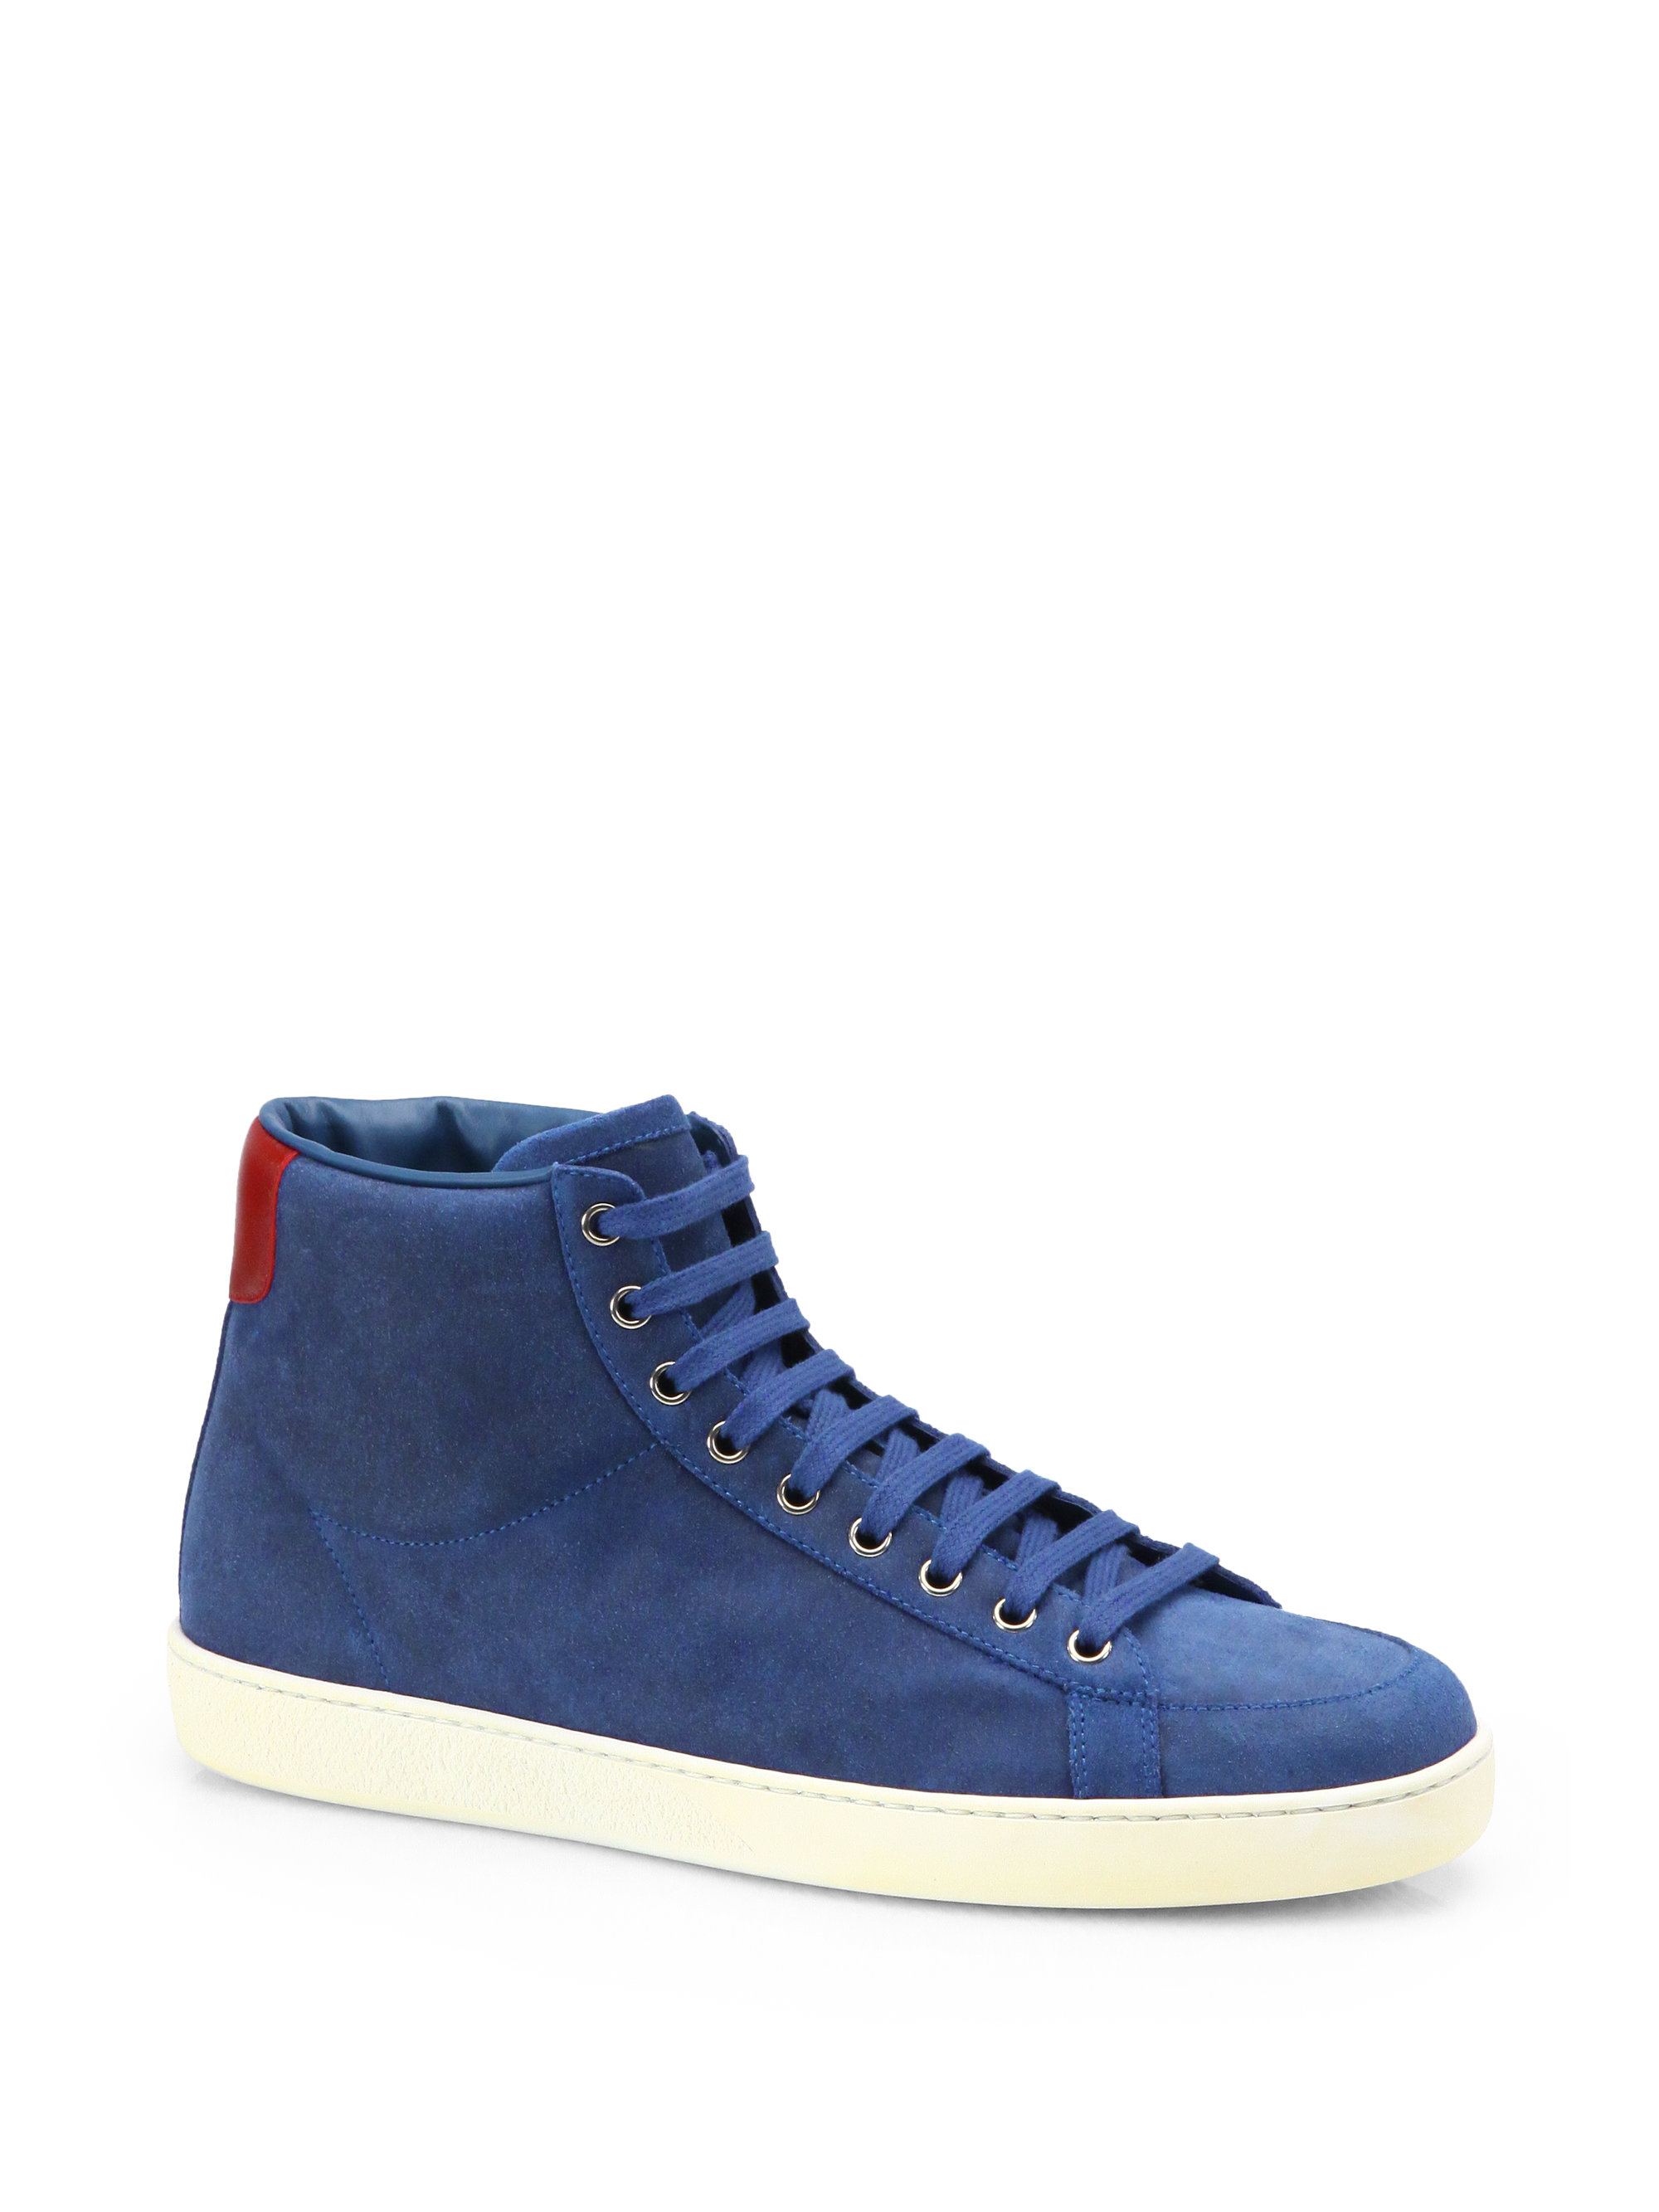 Gucci Brooklyn Hightop Sneakers in Blue for Men (blue-navy) | Lyst